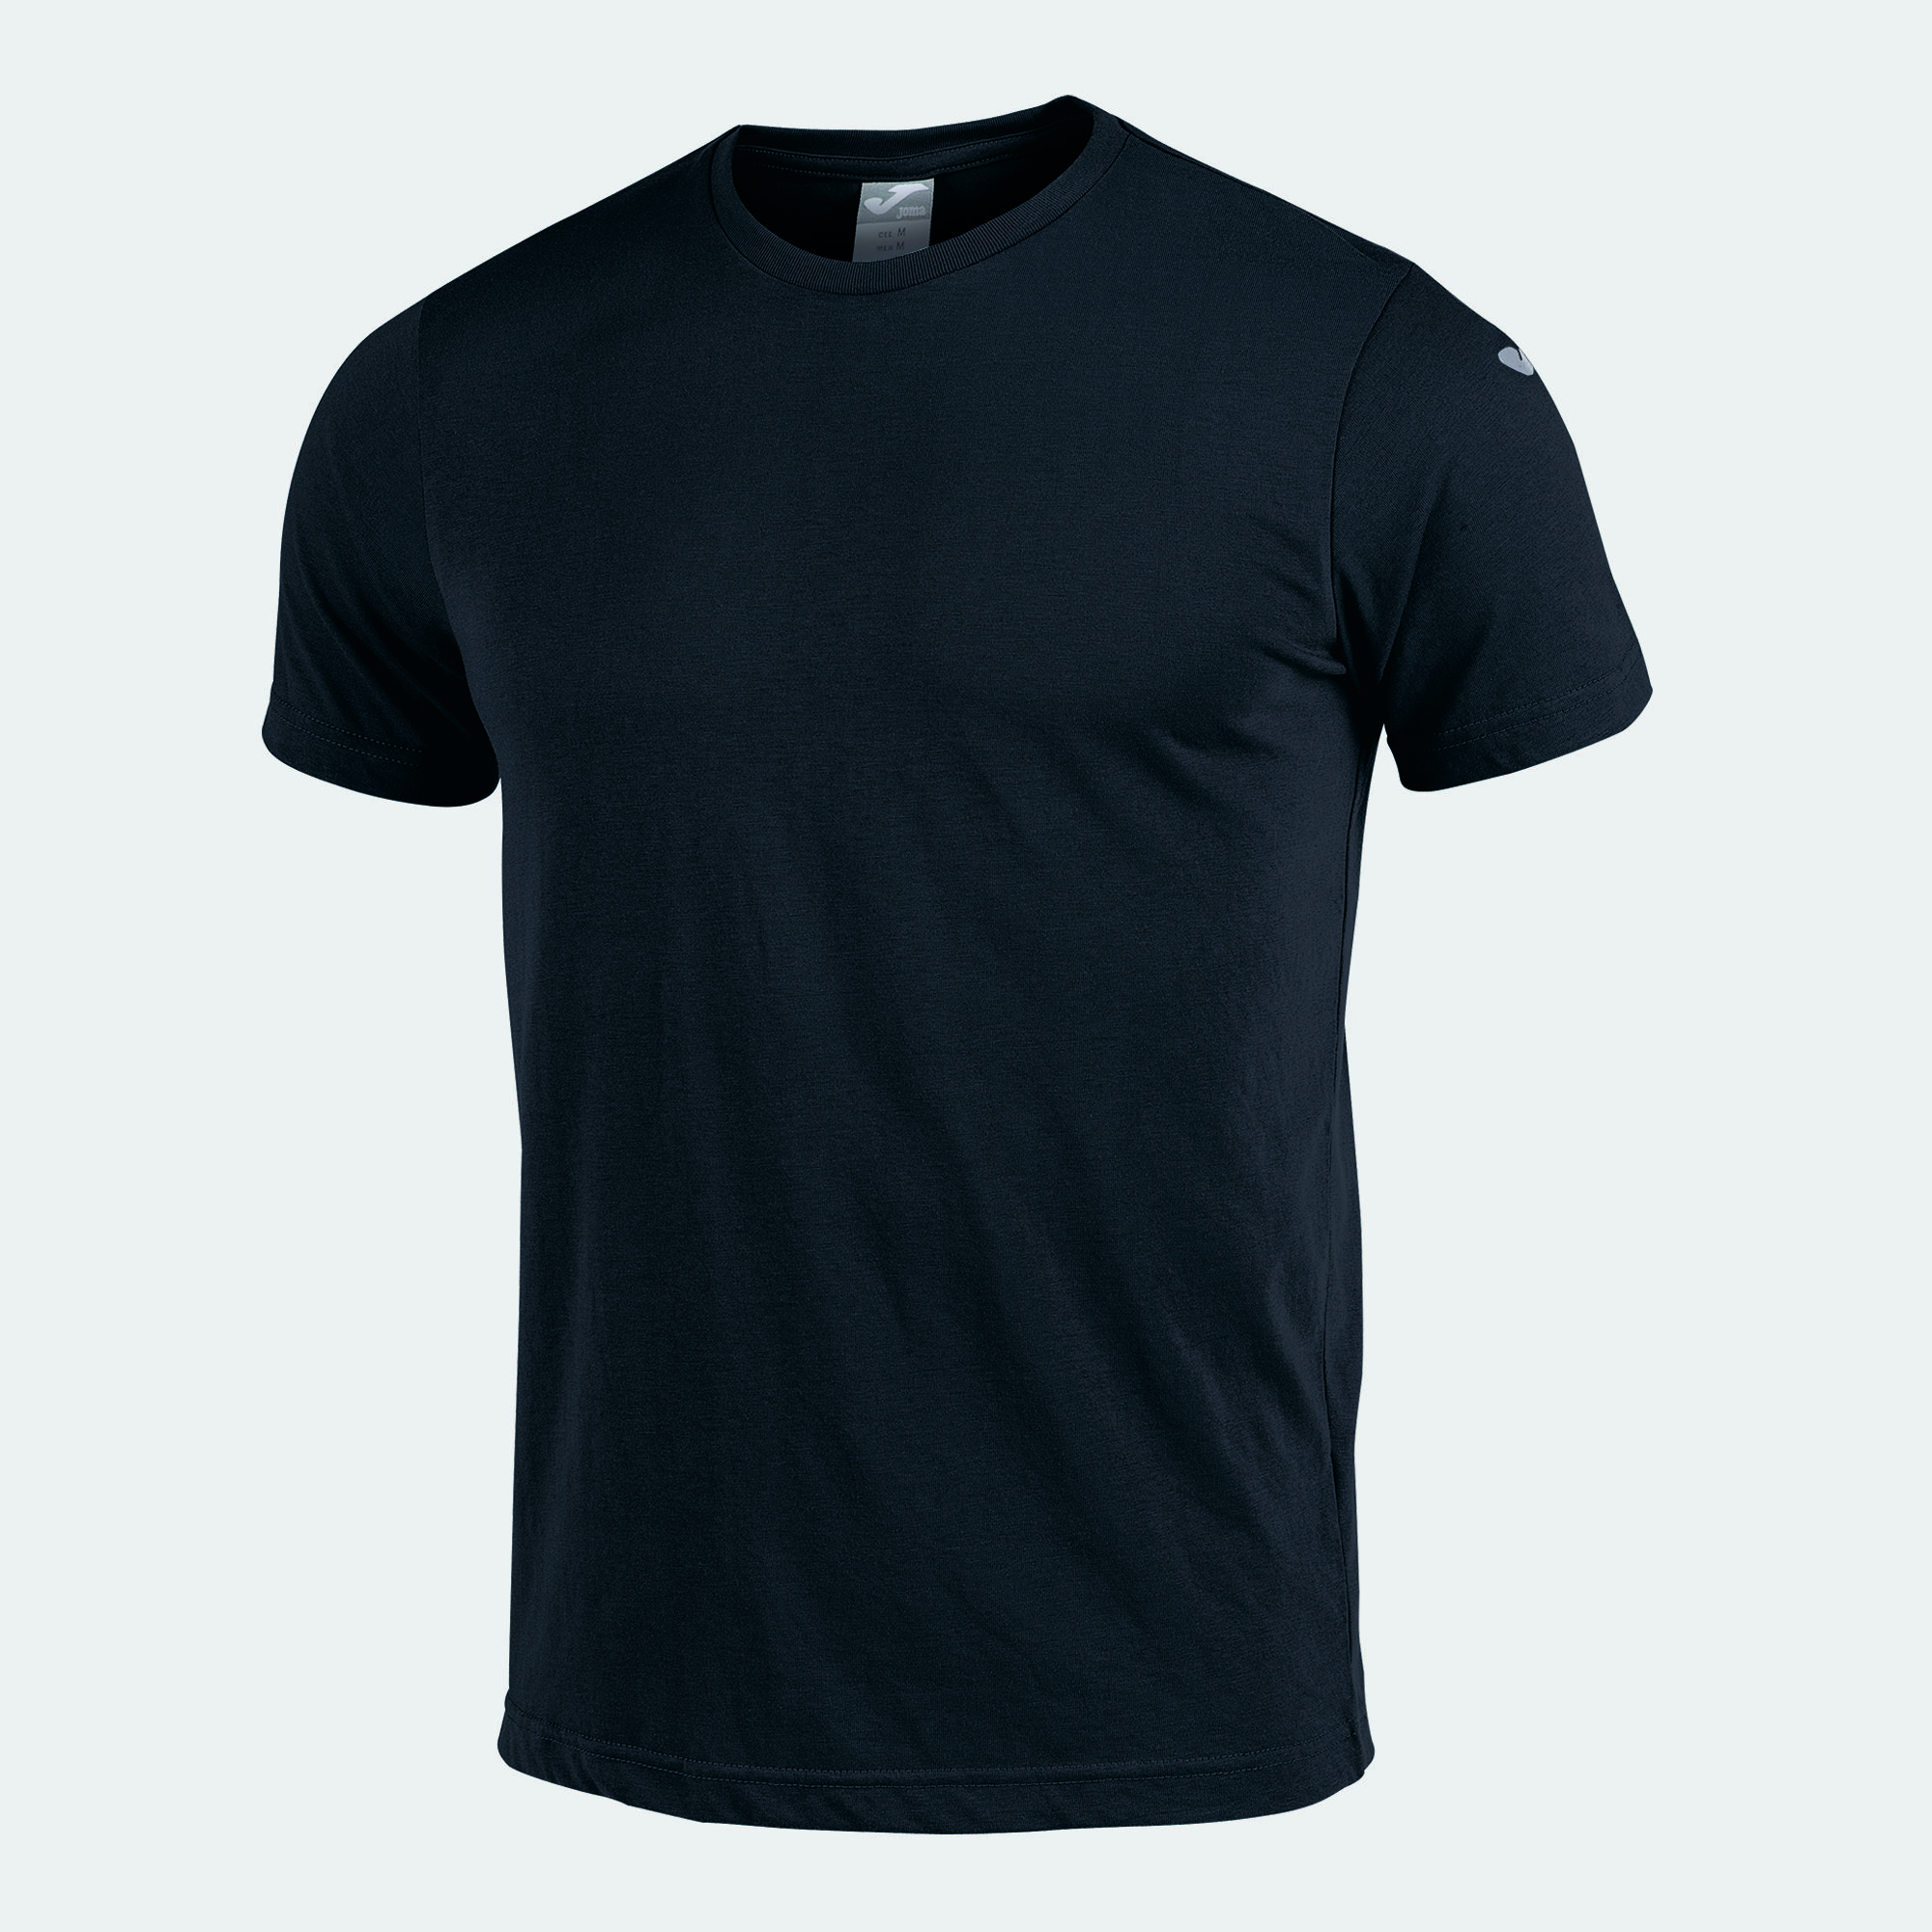 Camiseta manga corta hombre Nimes negro